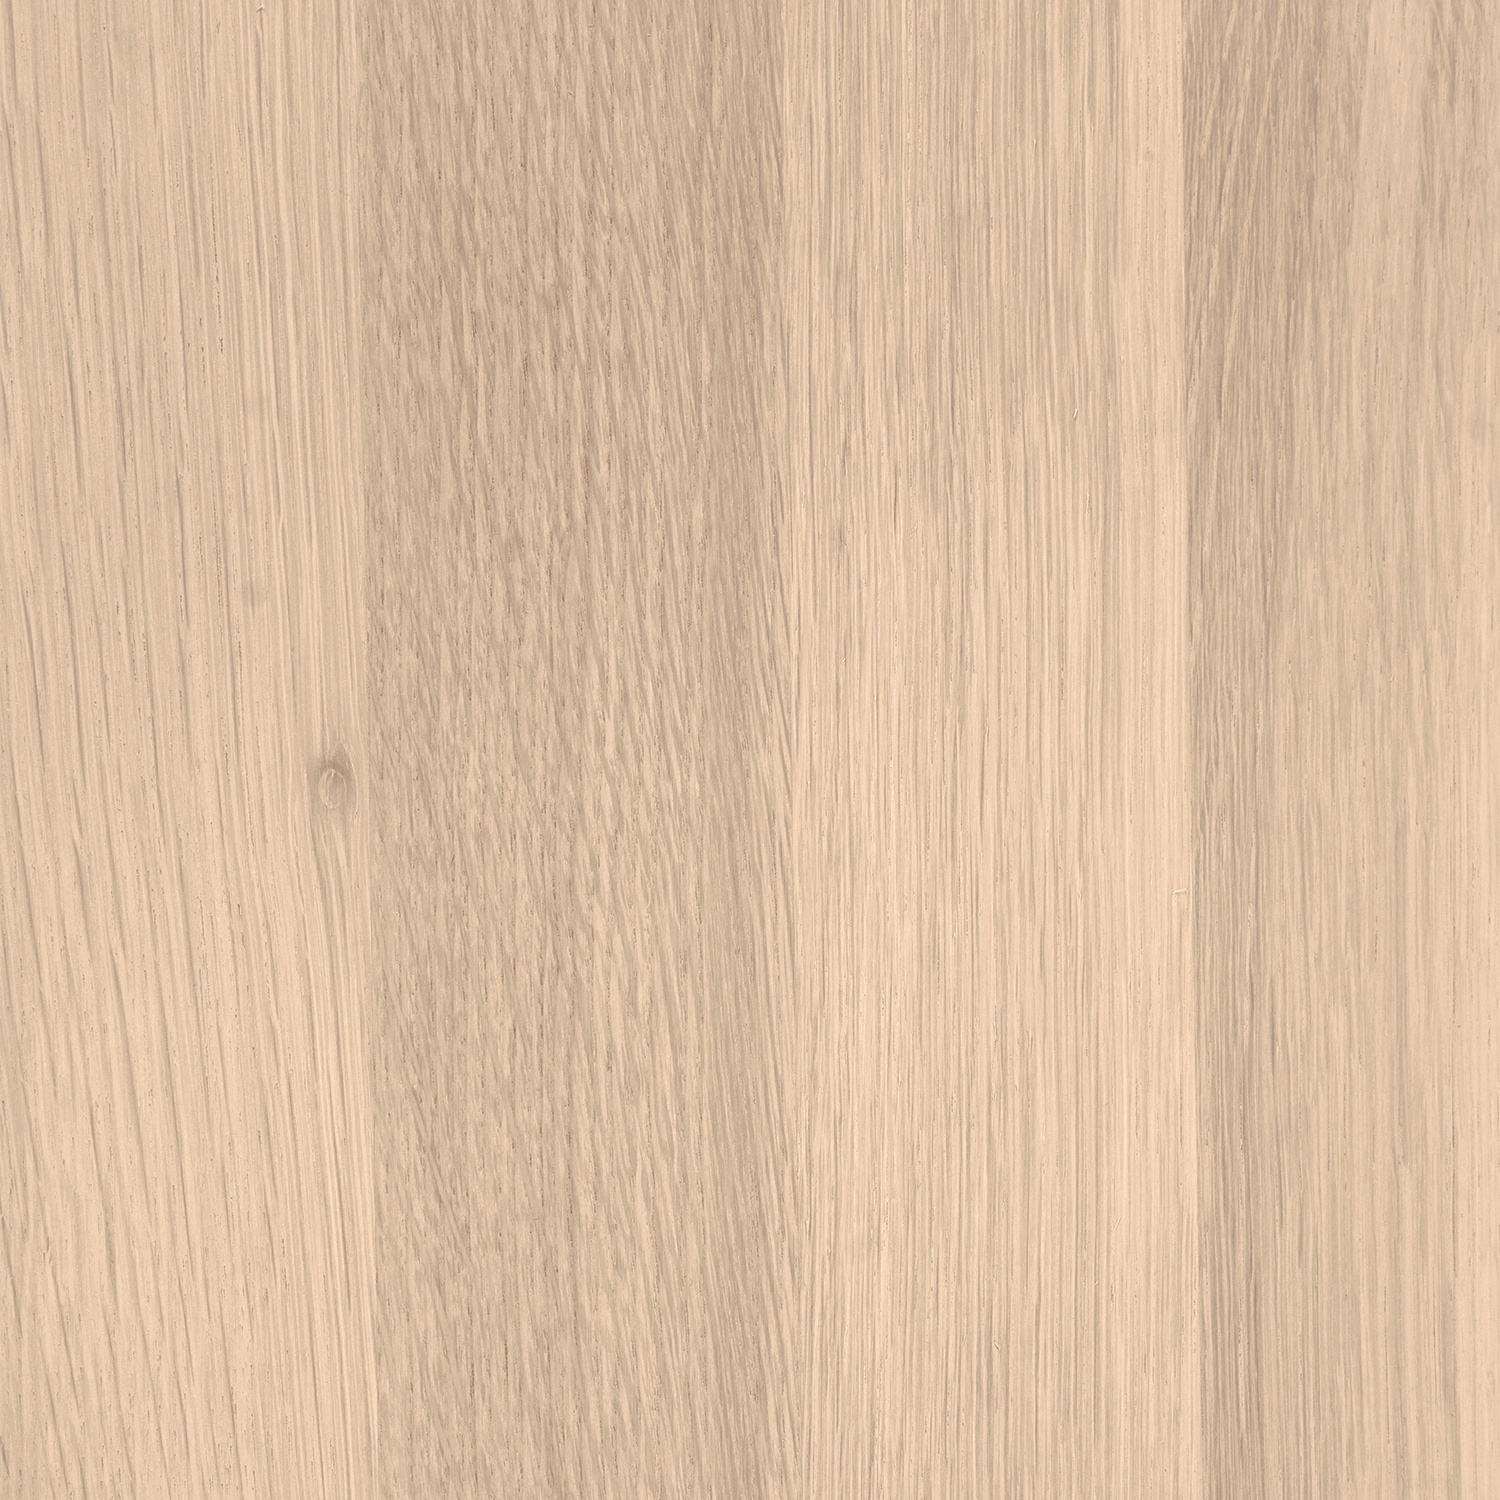  Eiken tafelblad op maat - 2,3 cm dik (1-laag) - foutvrij Europees eikenhout - verlijmd kd 8-12% - 50-120x50-350 cm